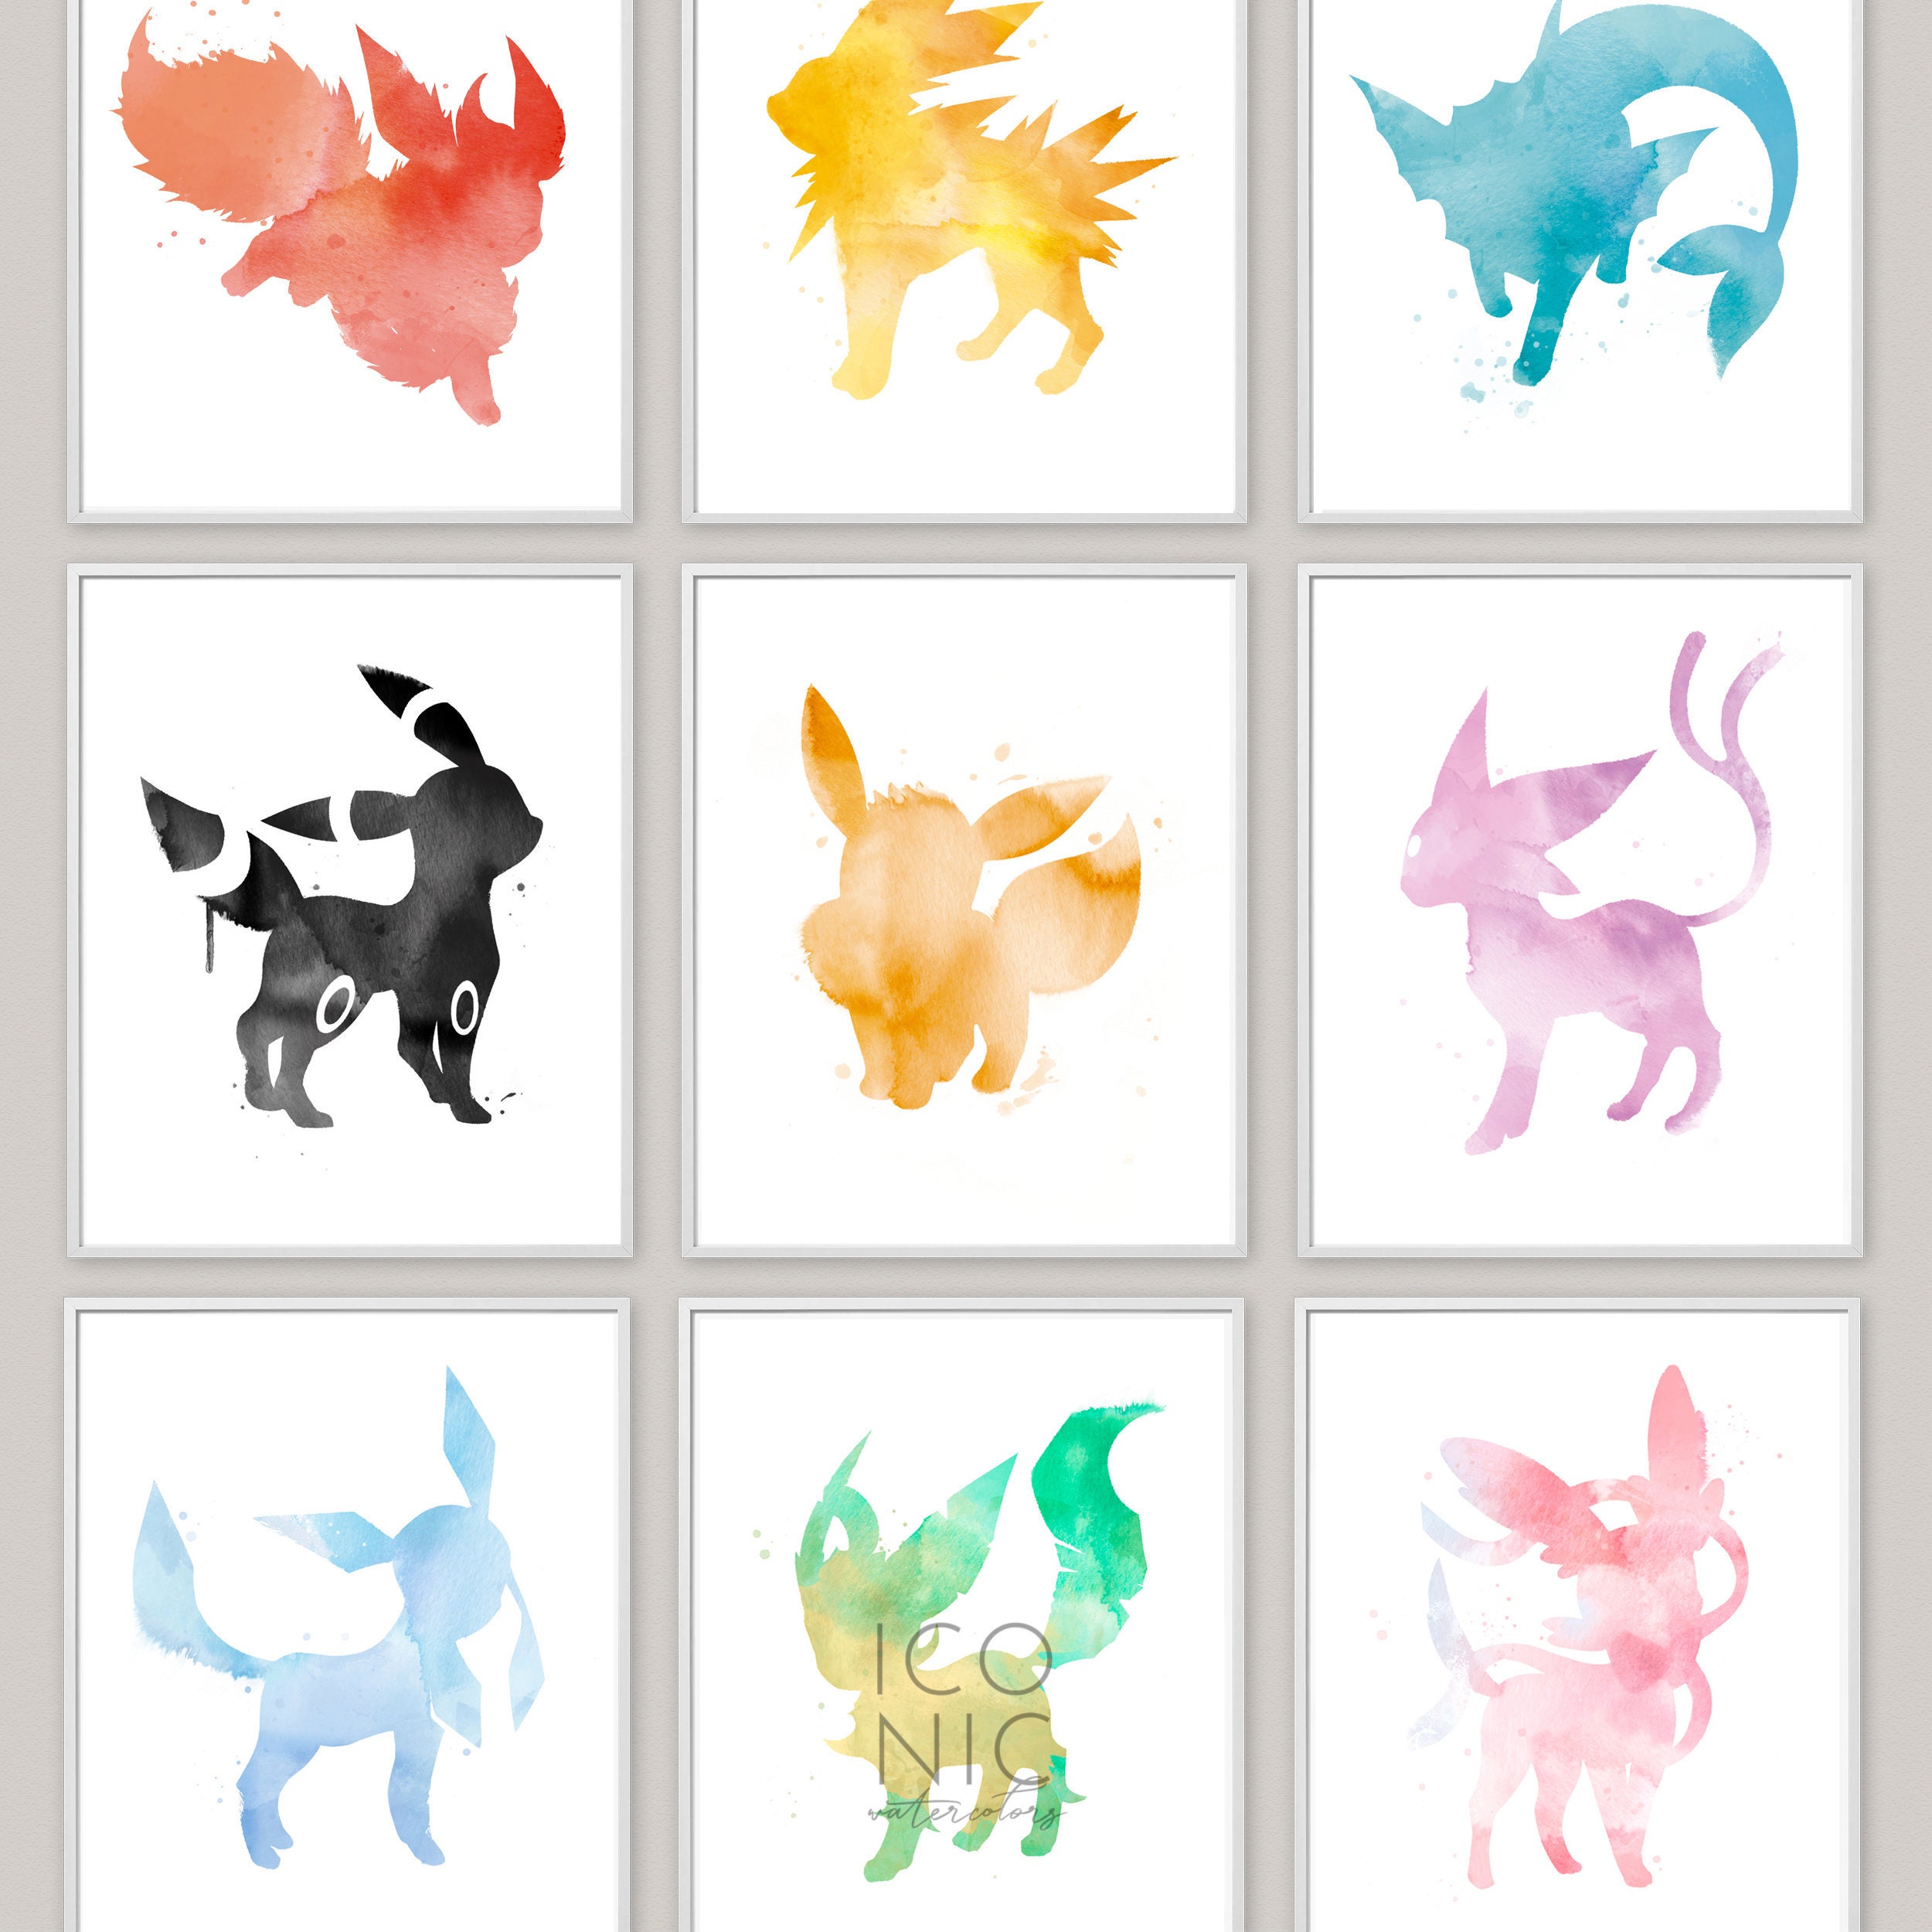 Pokémon - Eevee Evolutions Poster, Affiche